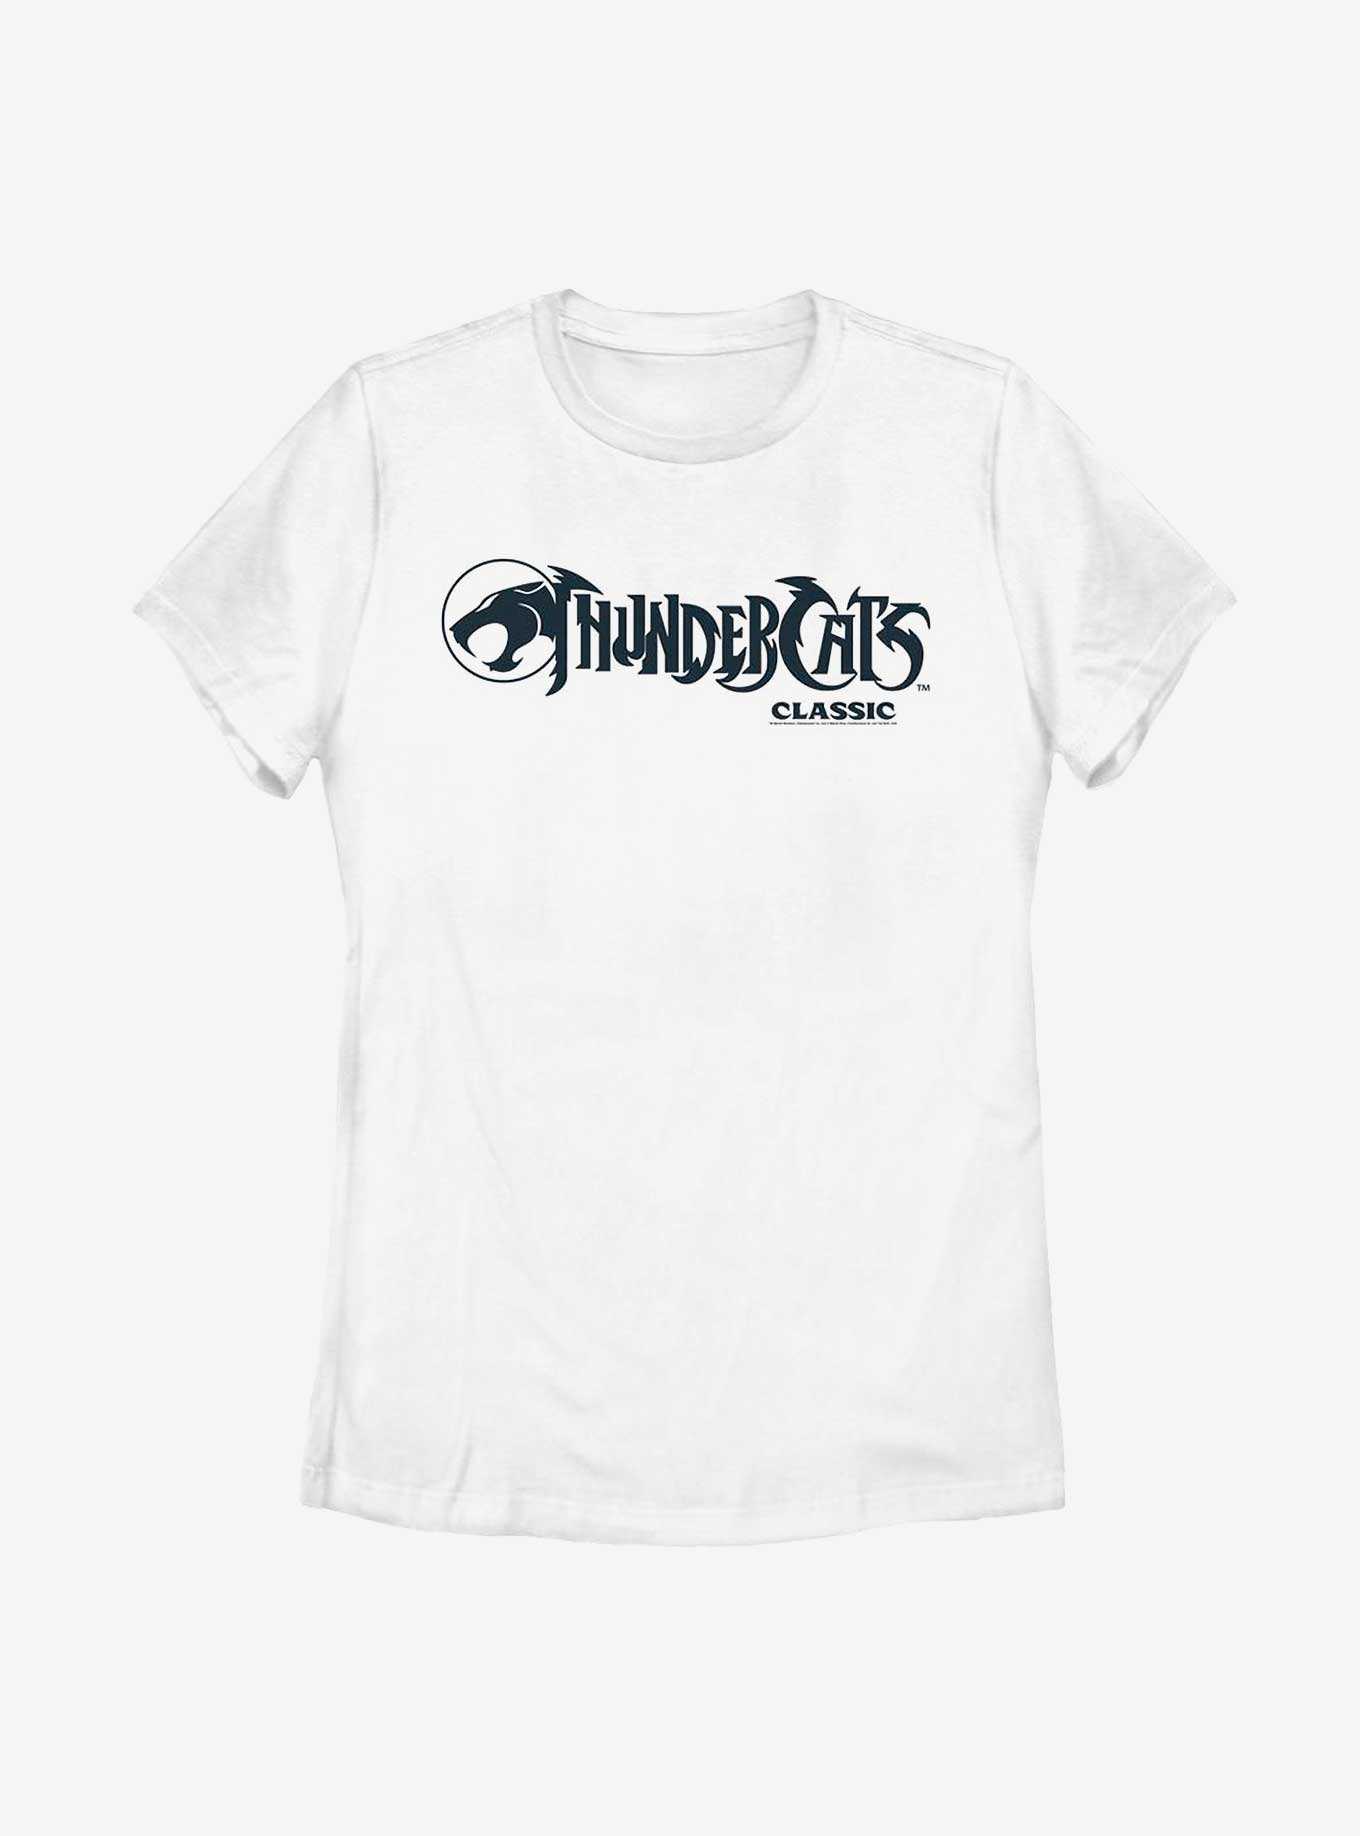 Thundercats Logo Black And White Womens T-Shirt, , hi-res